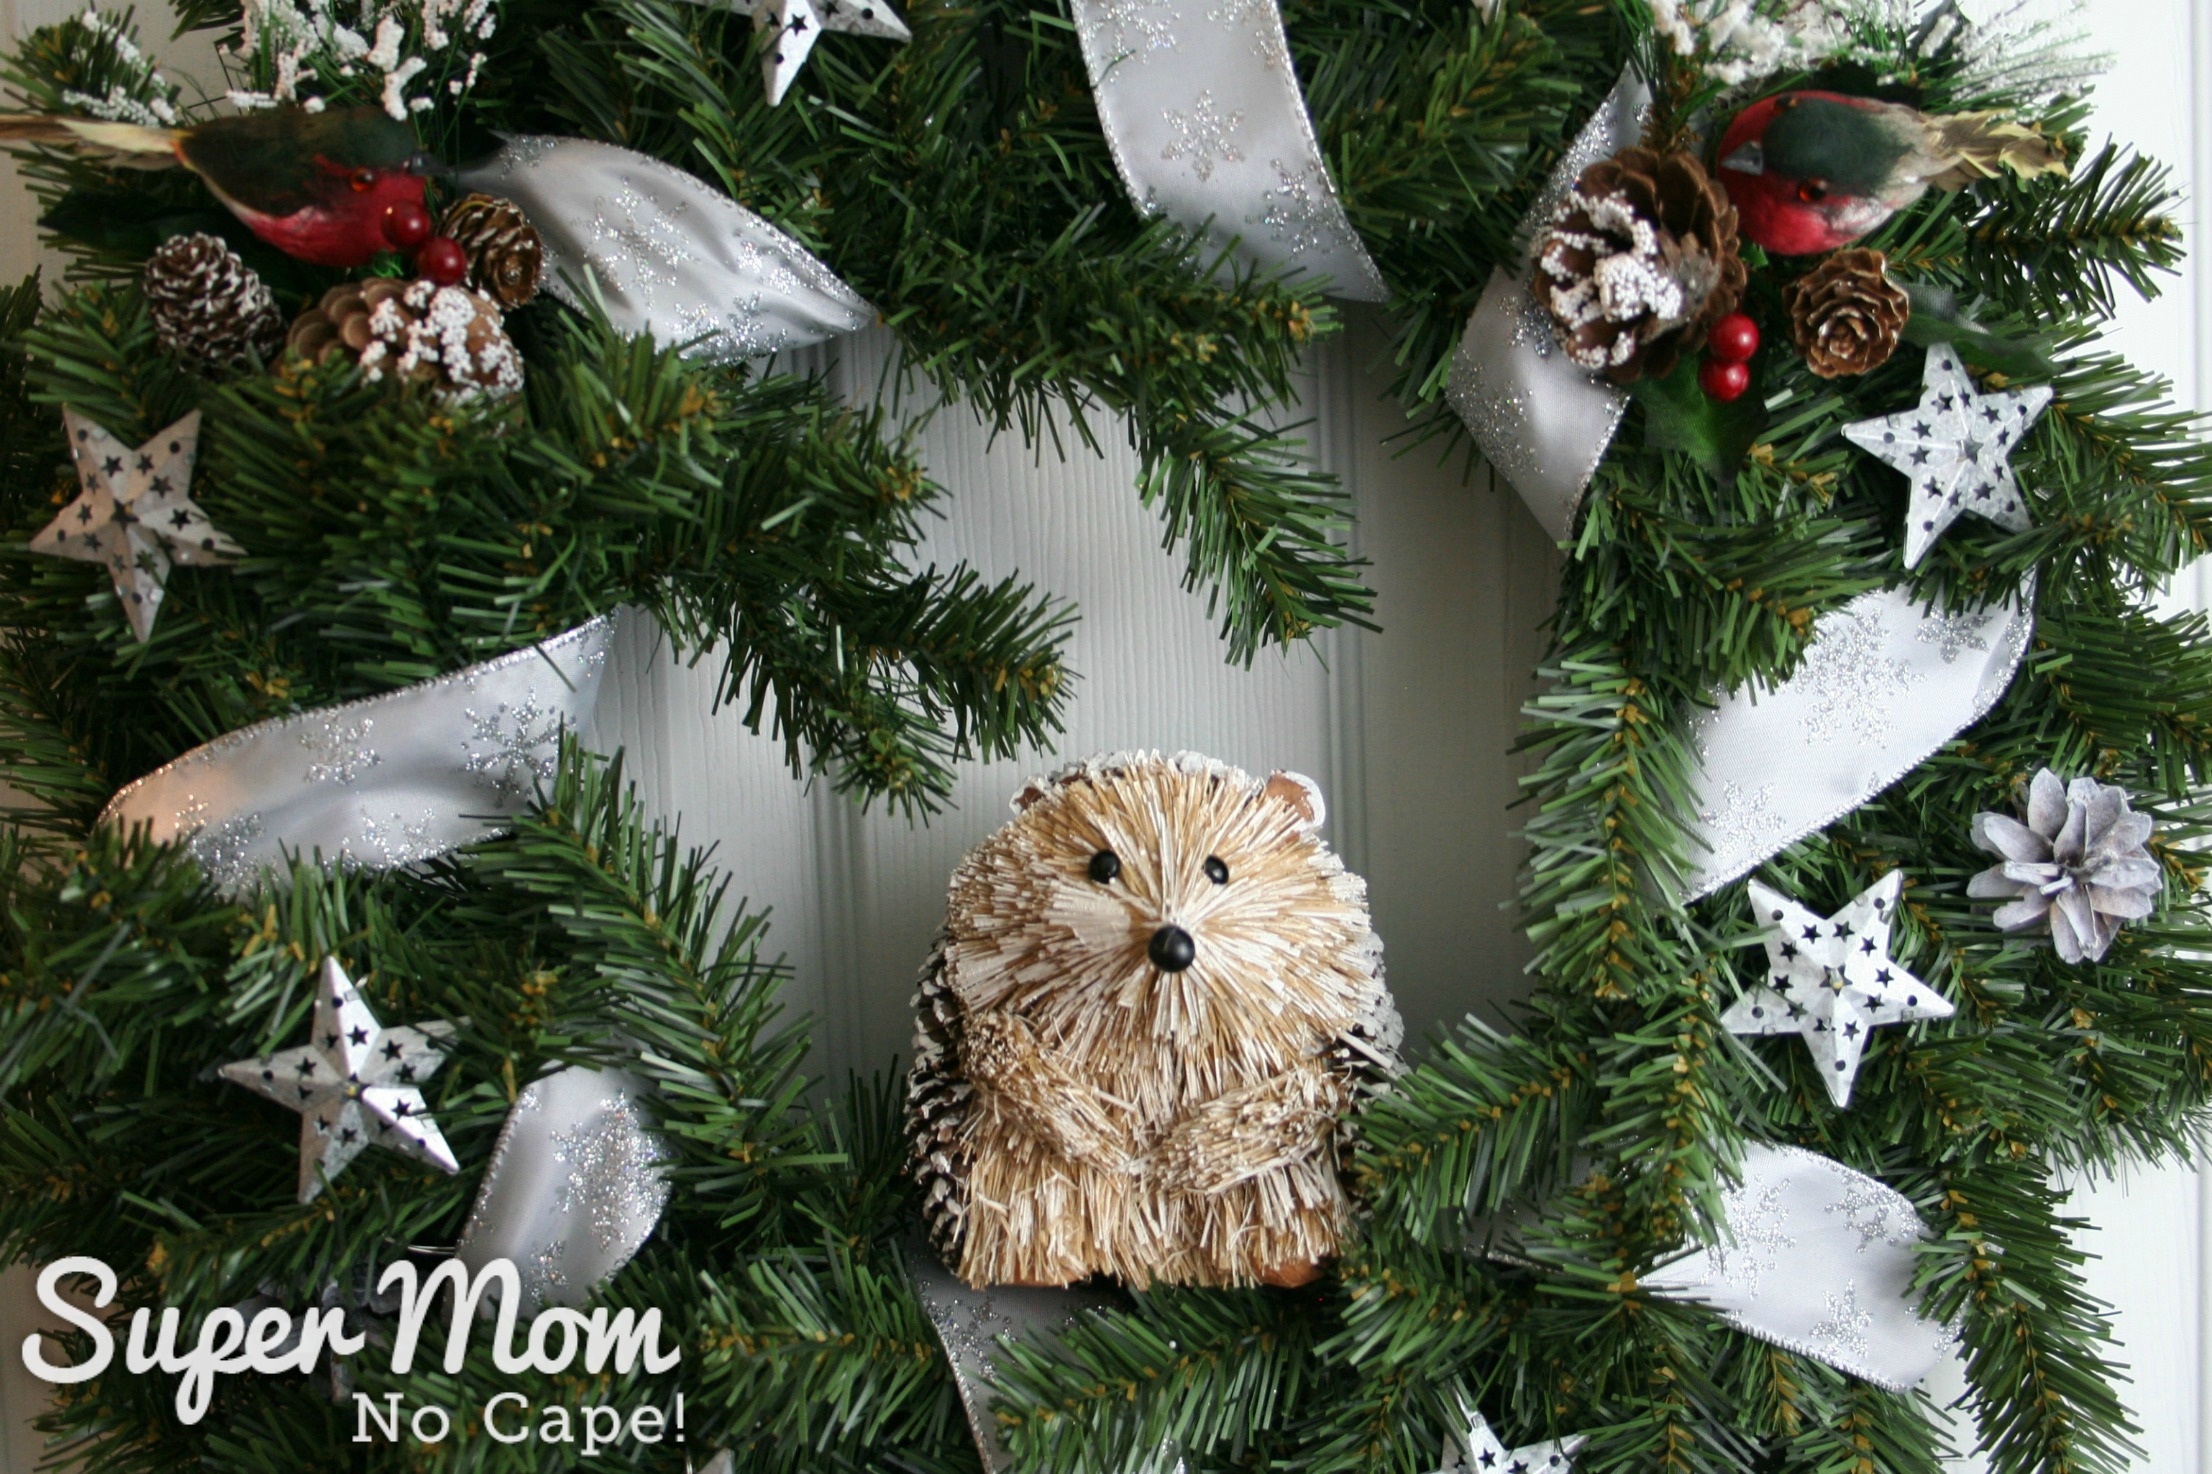 Hedgehog and 2 birds on the wreath